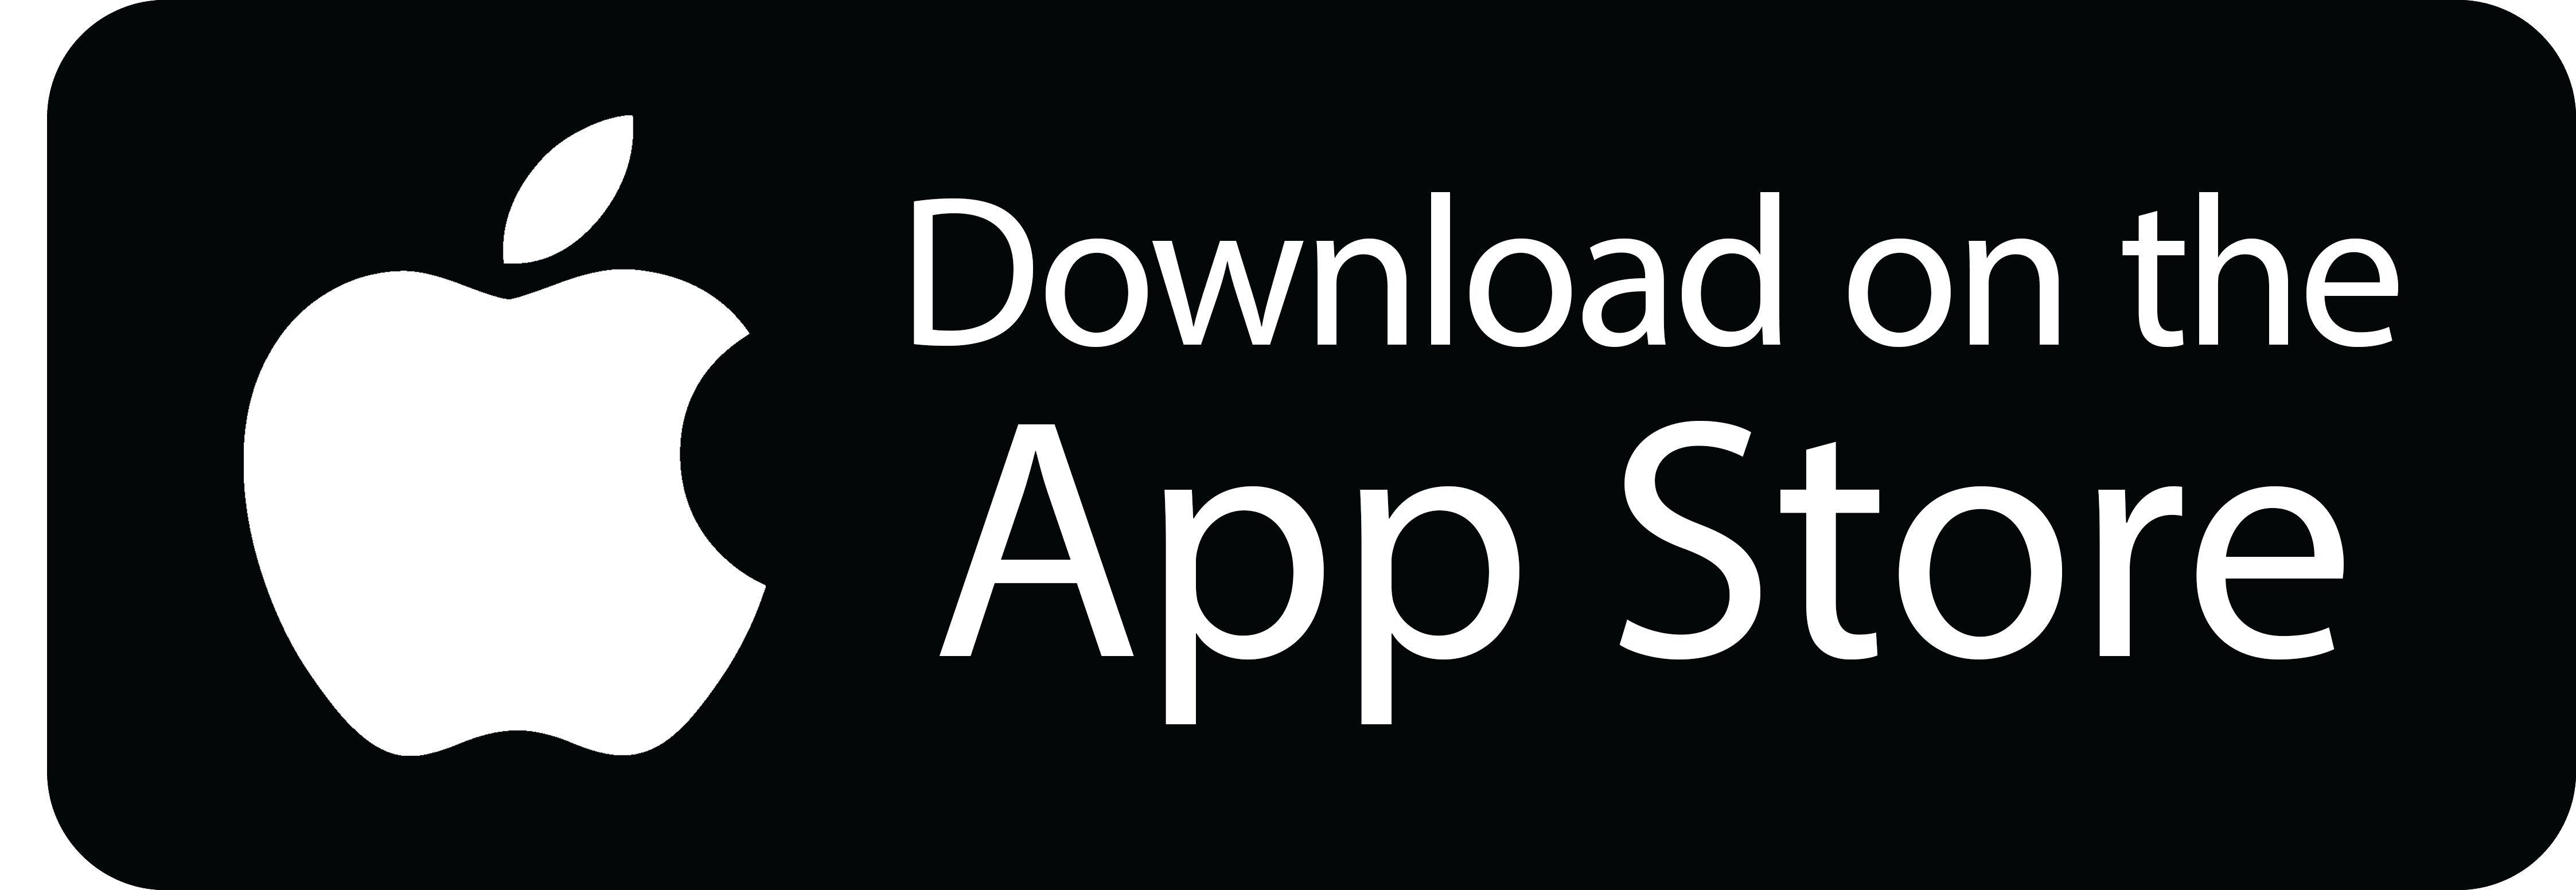 ios app for sbi